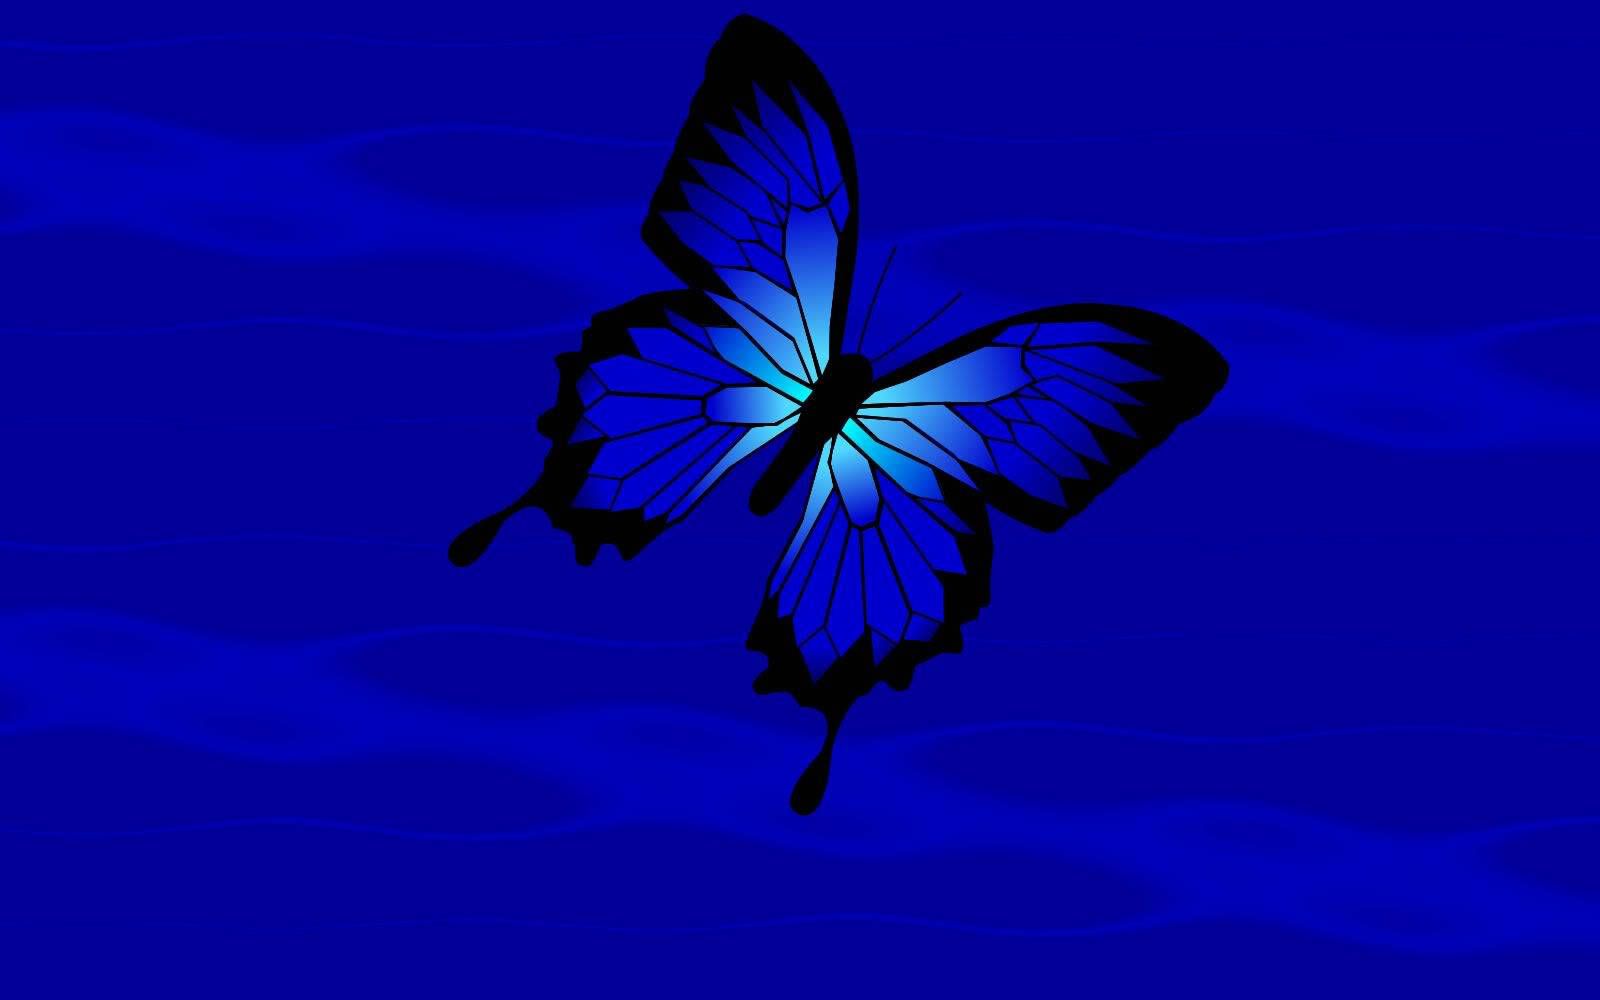 Free Blue Butterfly Aesthetic Wallpaper Downloads, Blue Butterfly Aesthetic Wallpaper for FREE